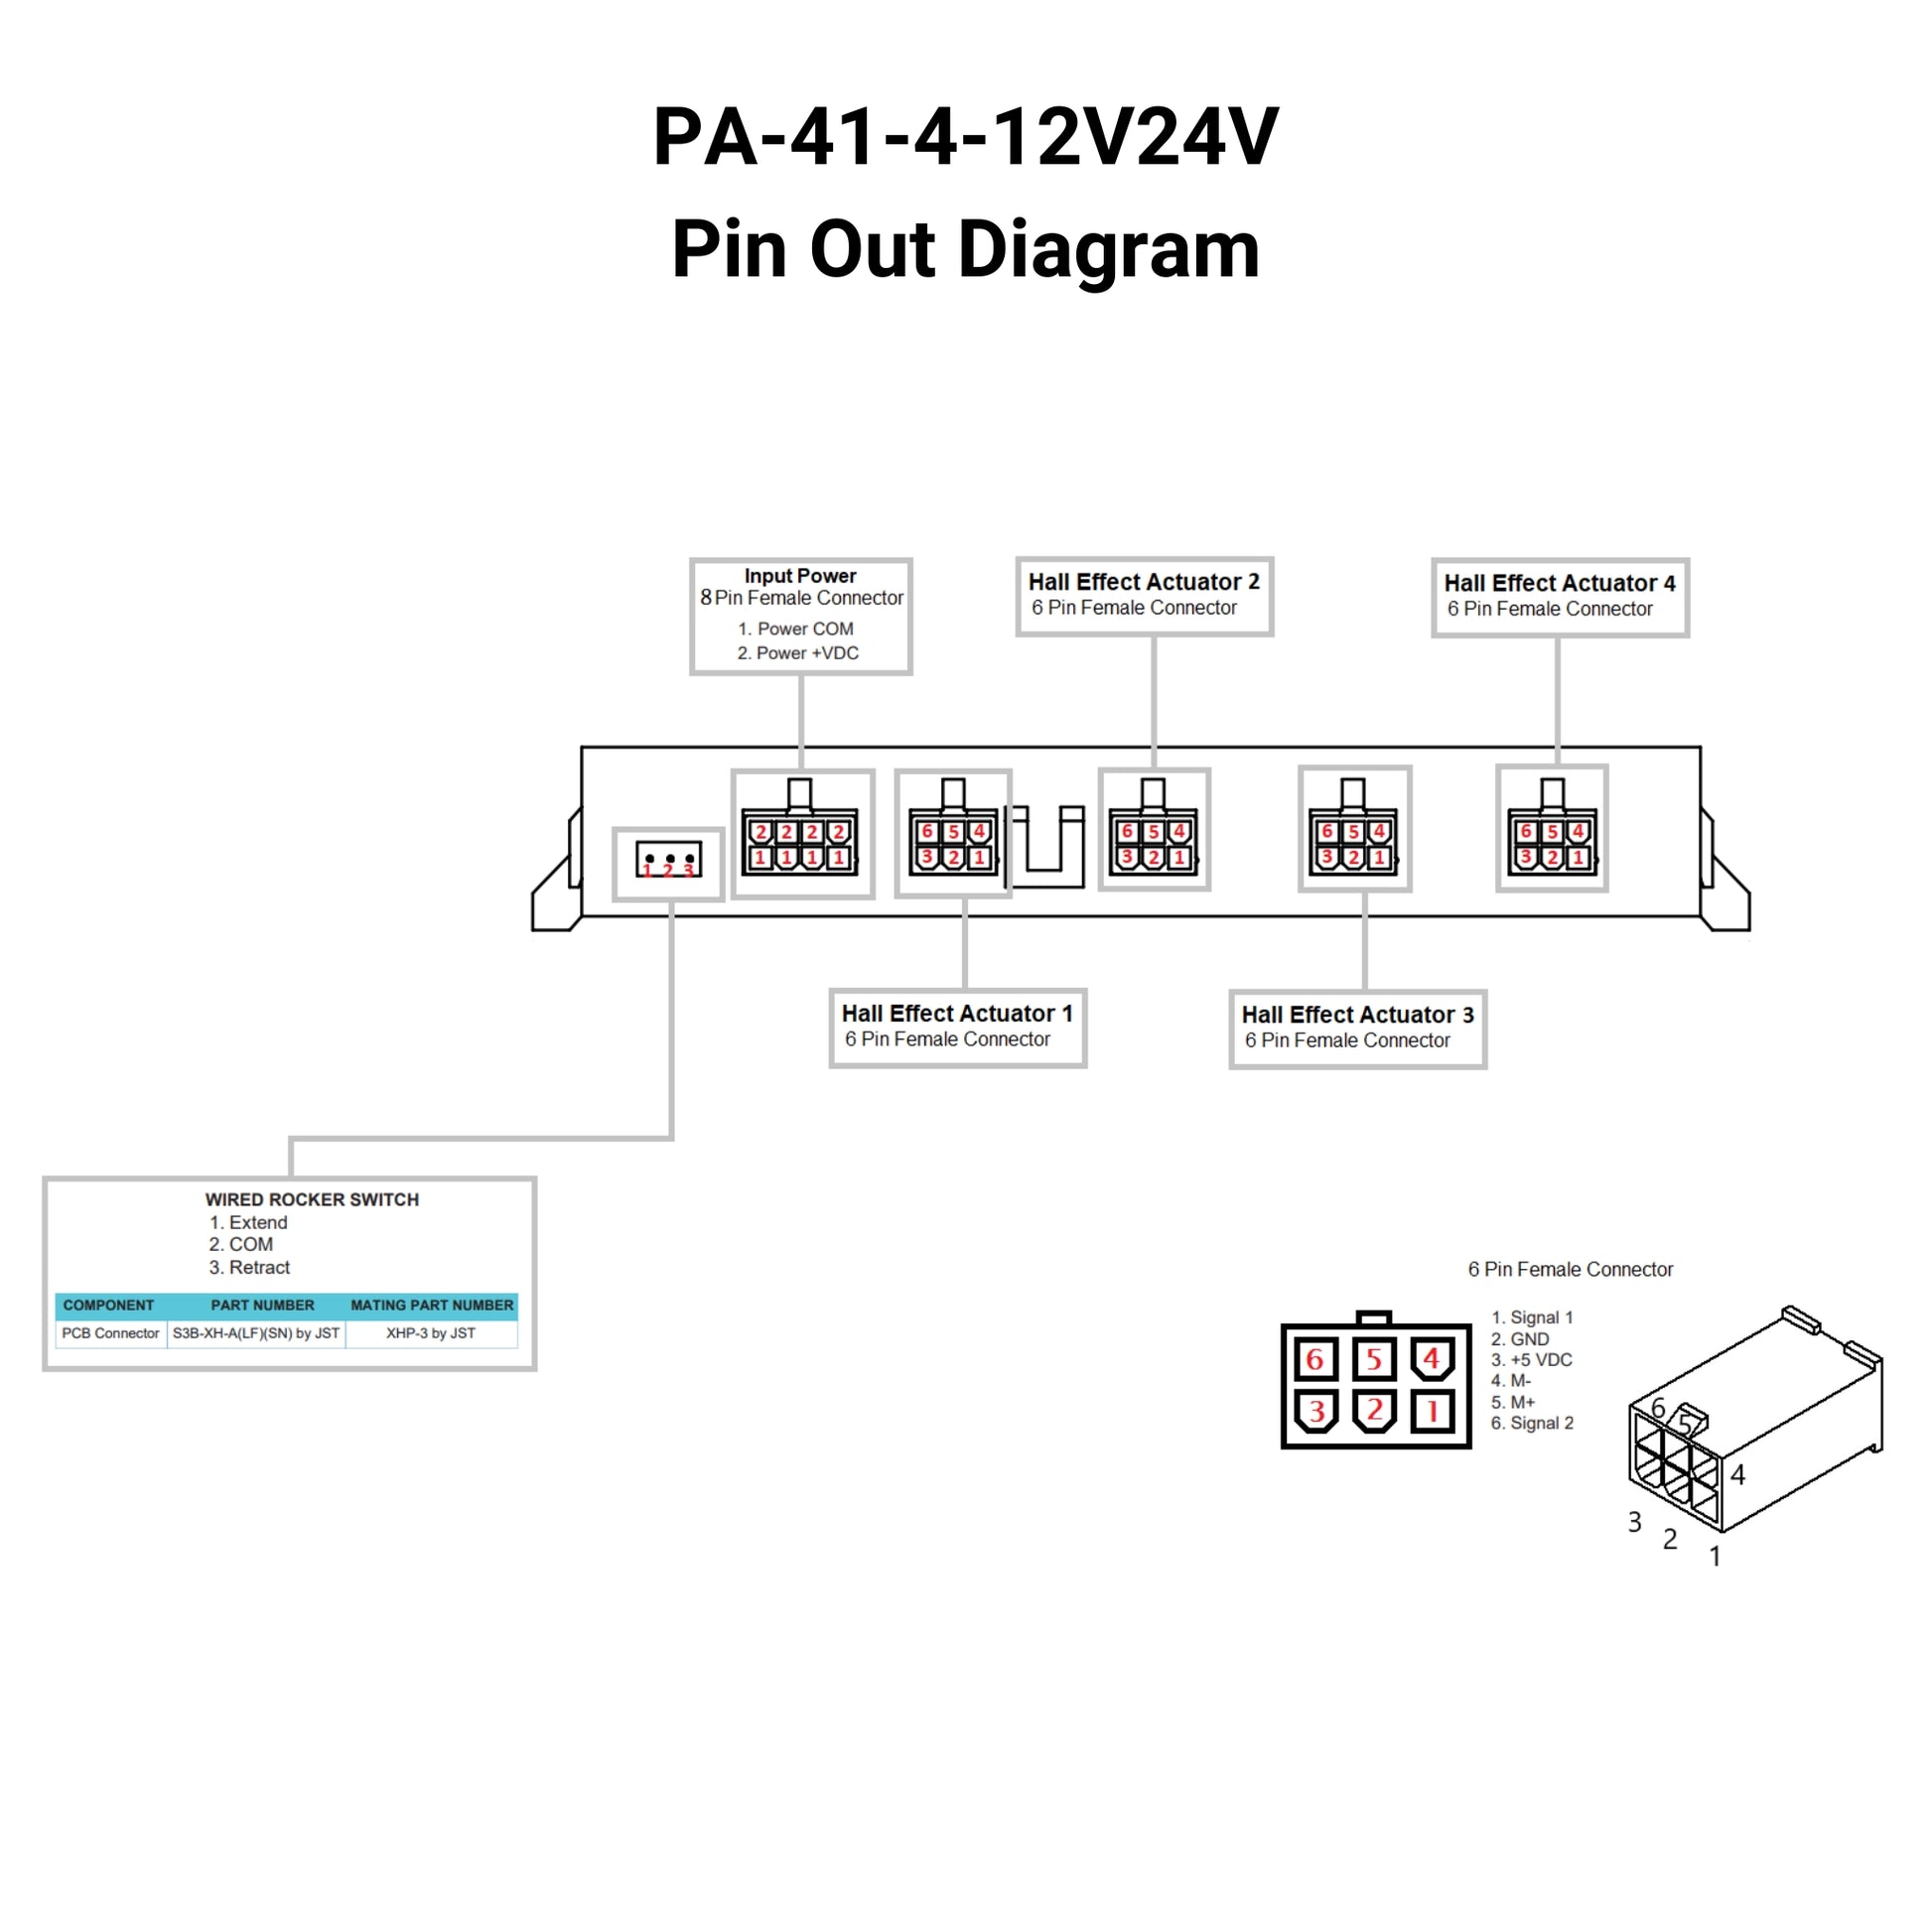 PA-41-4-12V24 control box pin out diagram